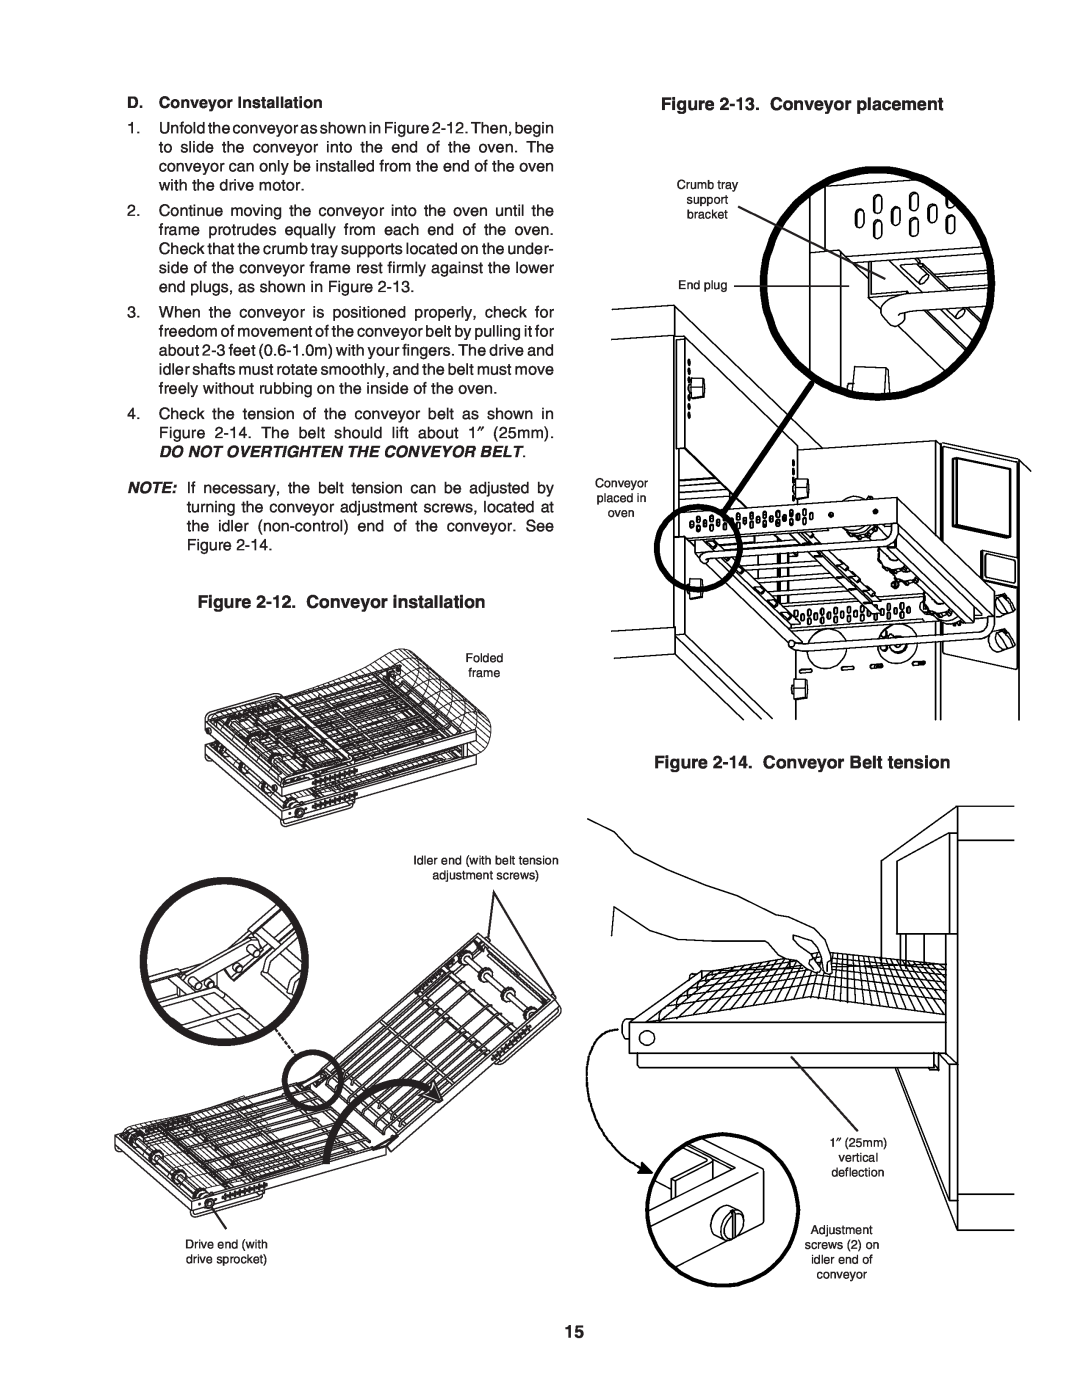 Middleby Marshall PS840 Series 12. Conveyor installation, 13. Conveyor placement, 14. Conveyor Belt tension 